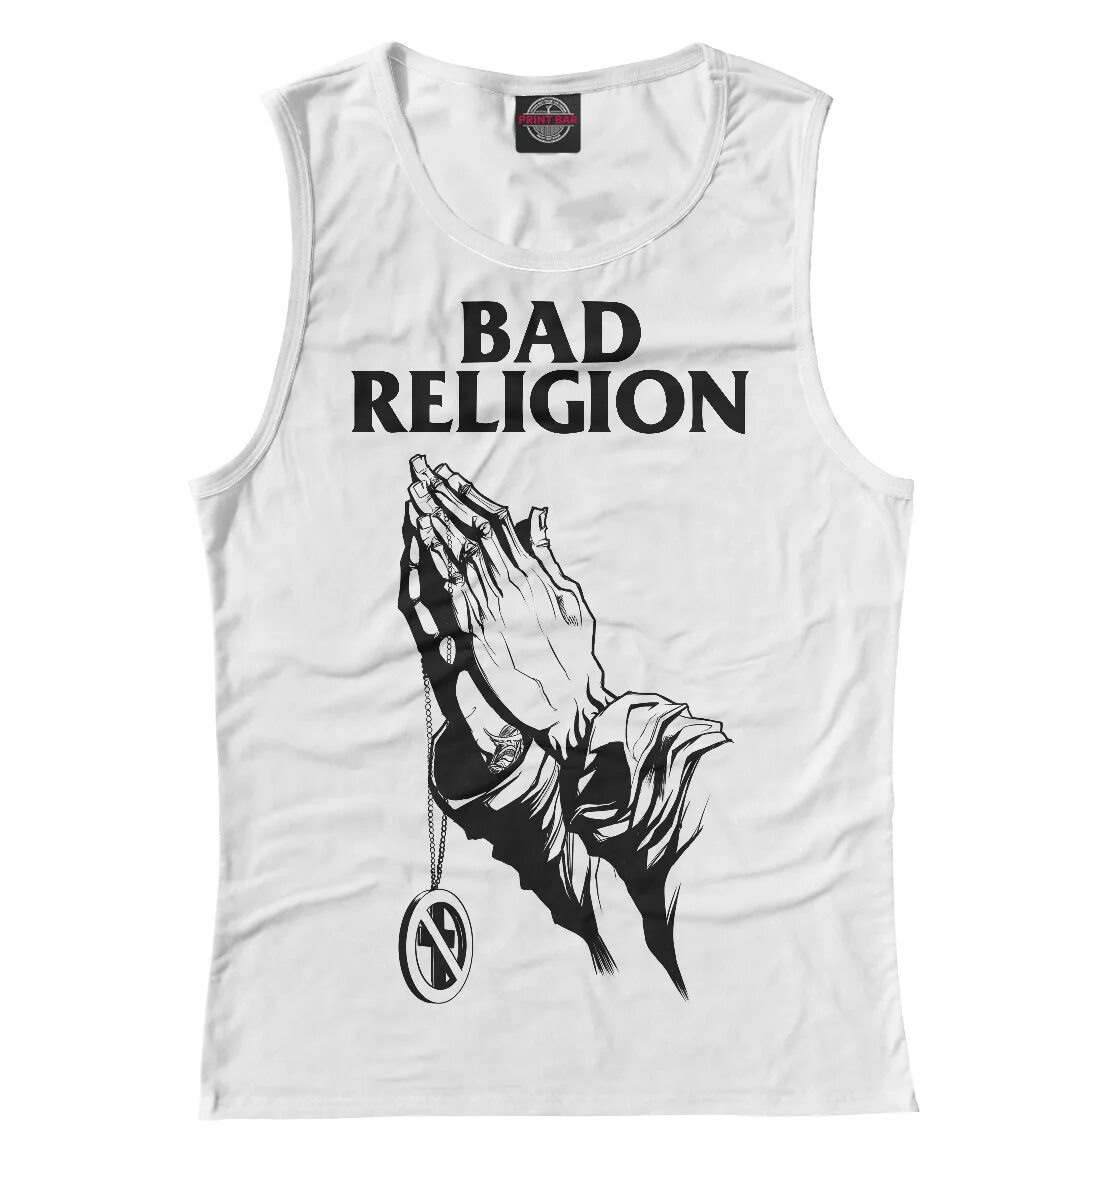 Bad Religion футболка. Футболка Religion мужская. Майка религион. Майки Religion мужские.